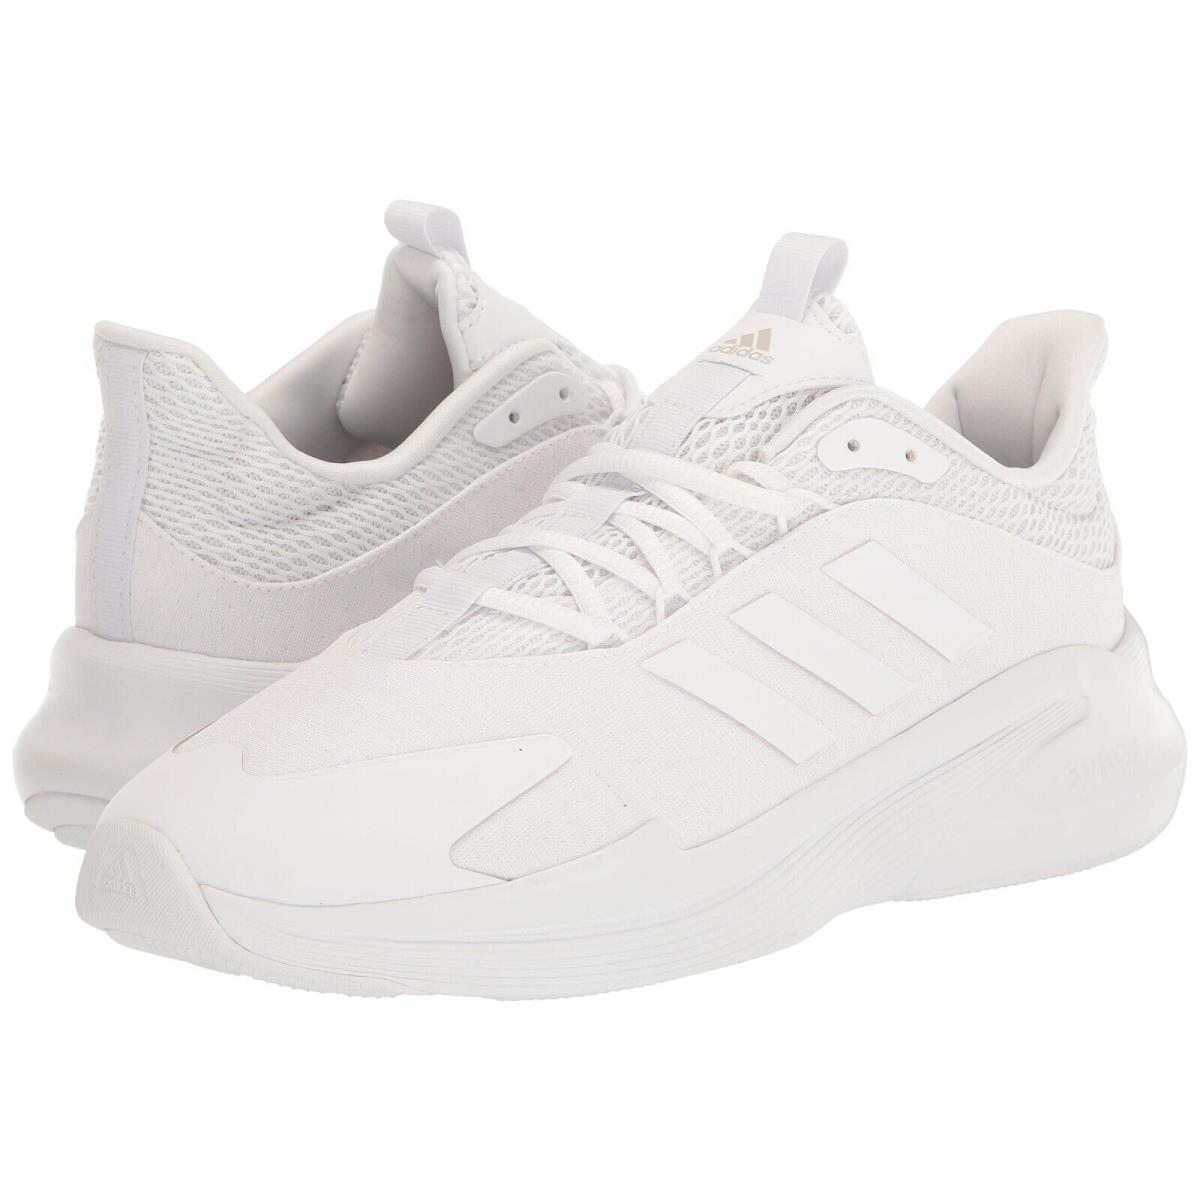 Adidas Mens Alphaedge Fashion Running Shoes White 11